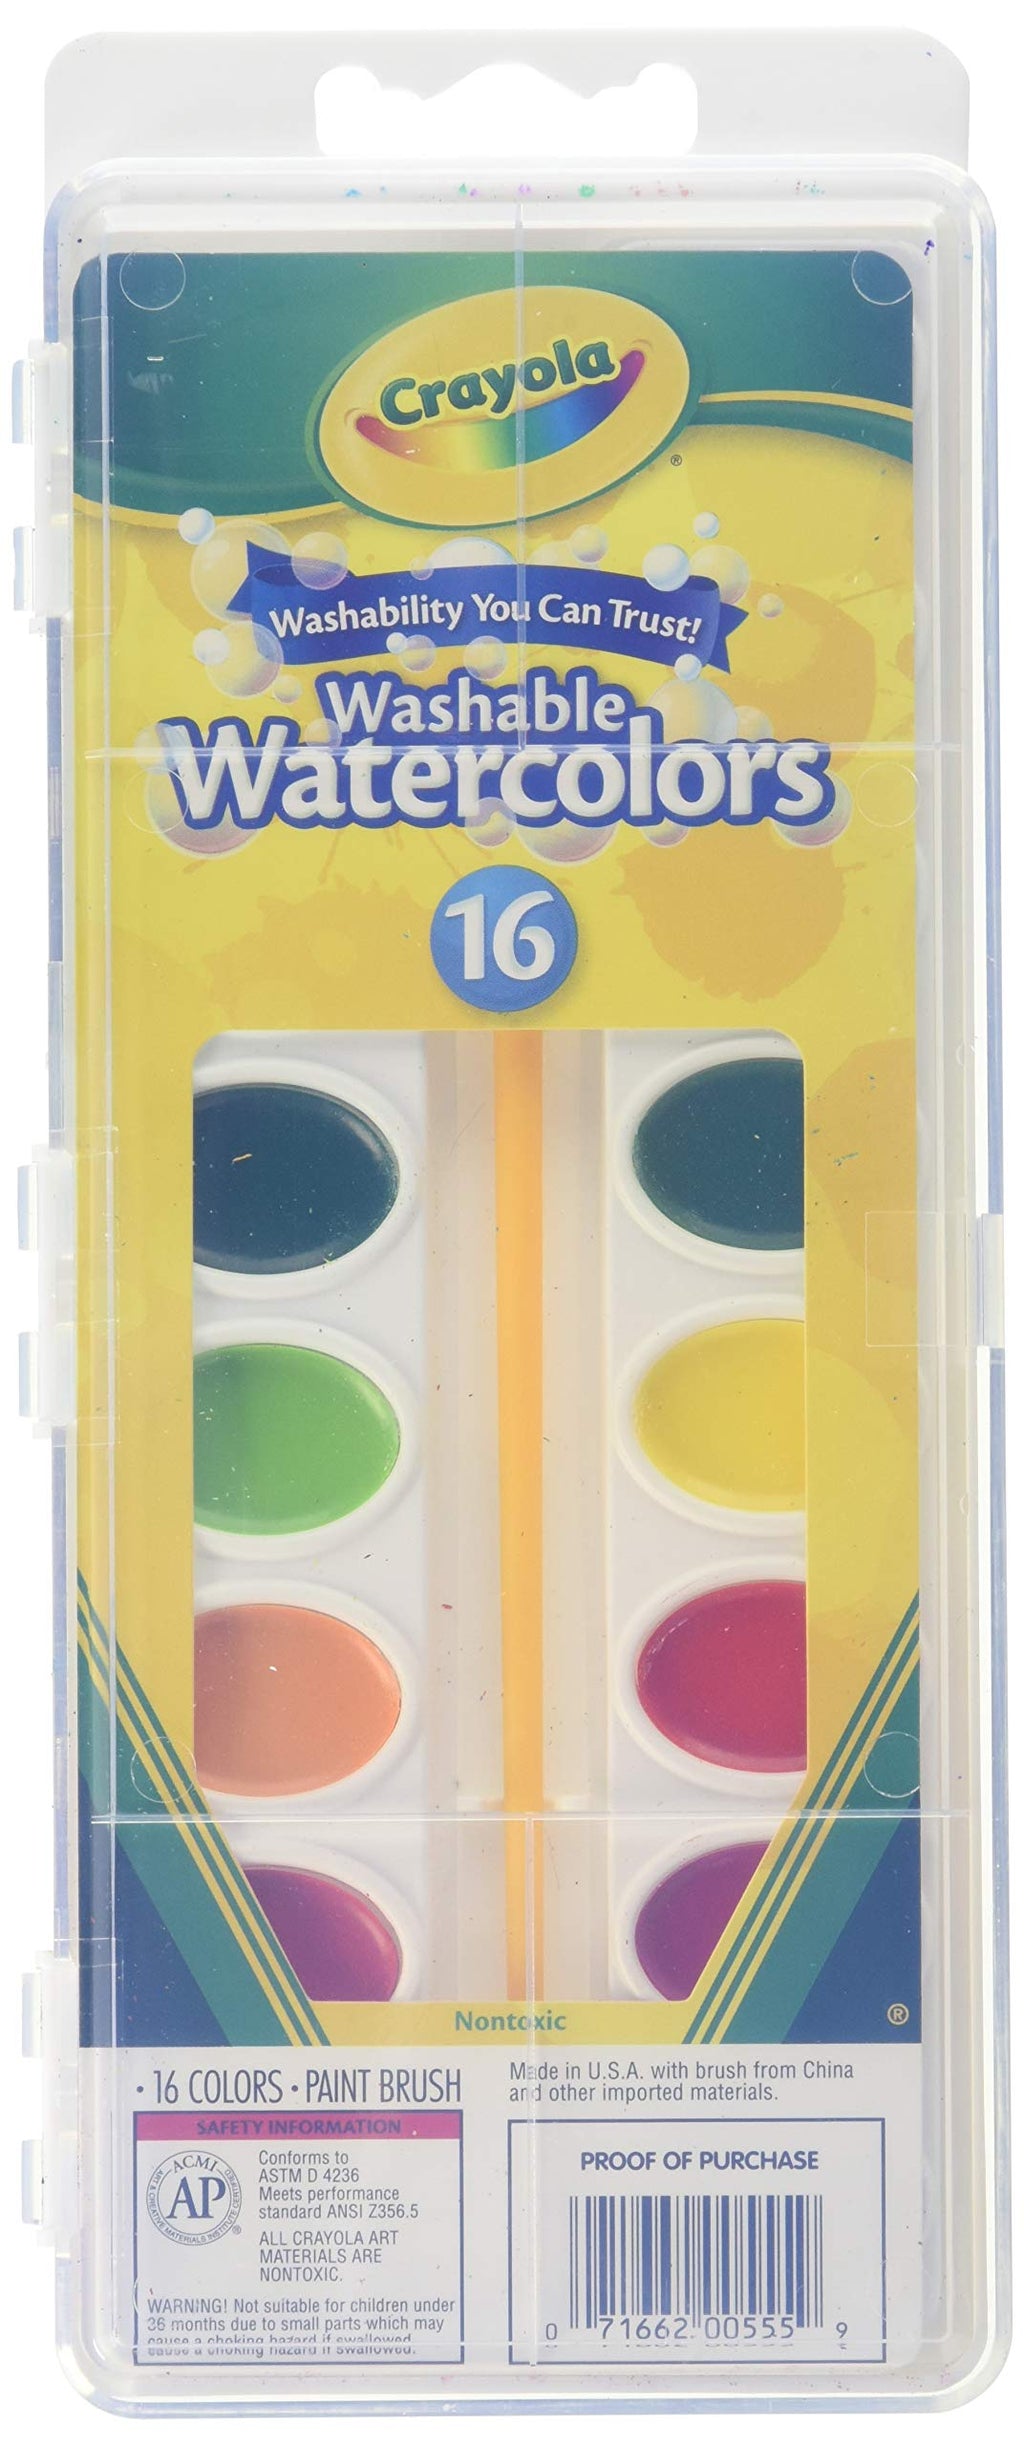 [Australia] - Crayola Washable Watercolors, 16 Count - 2 Per Case (530555) 